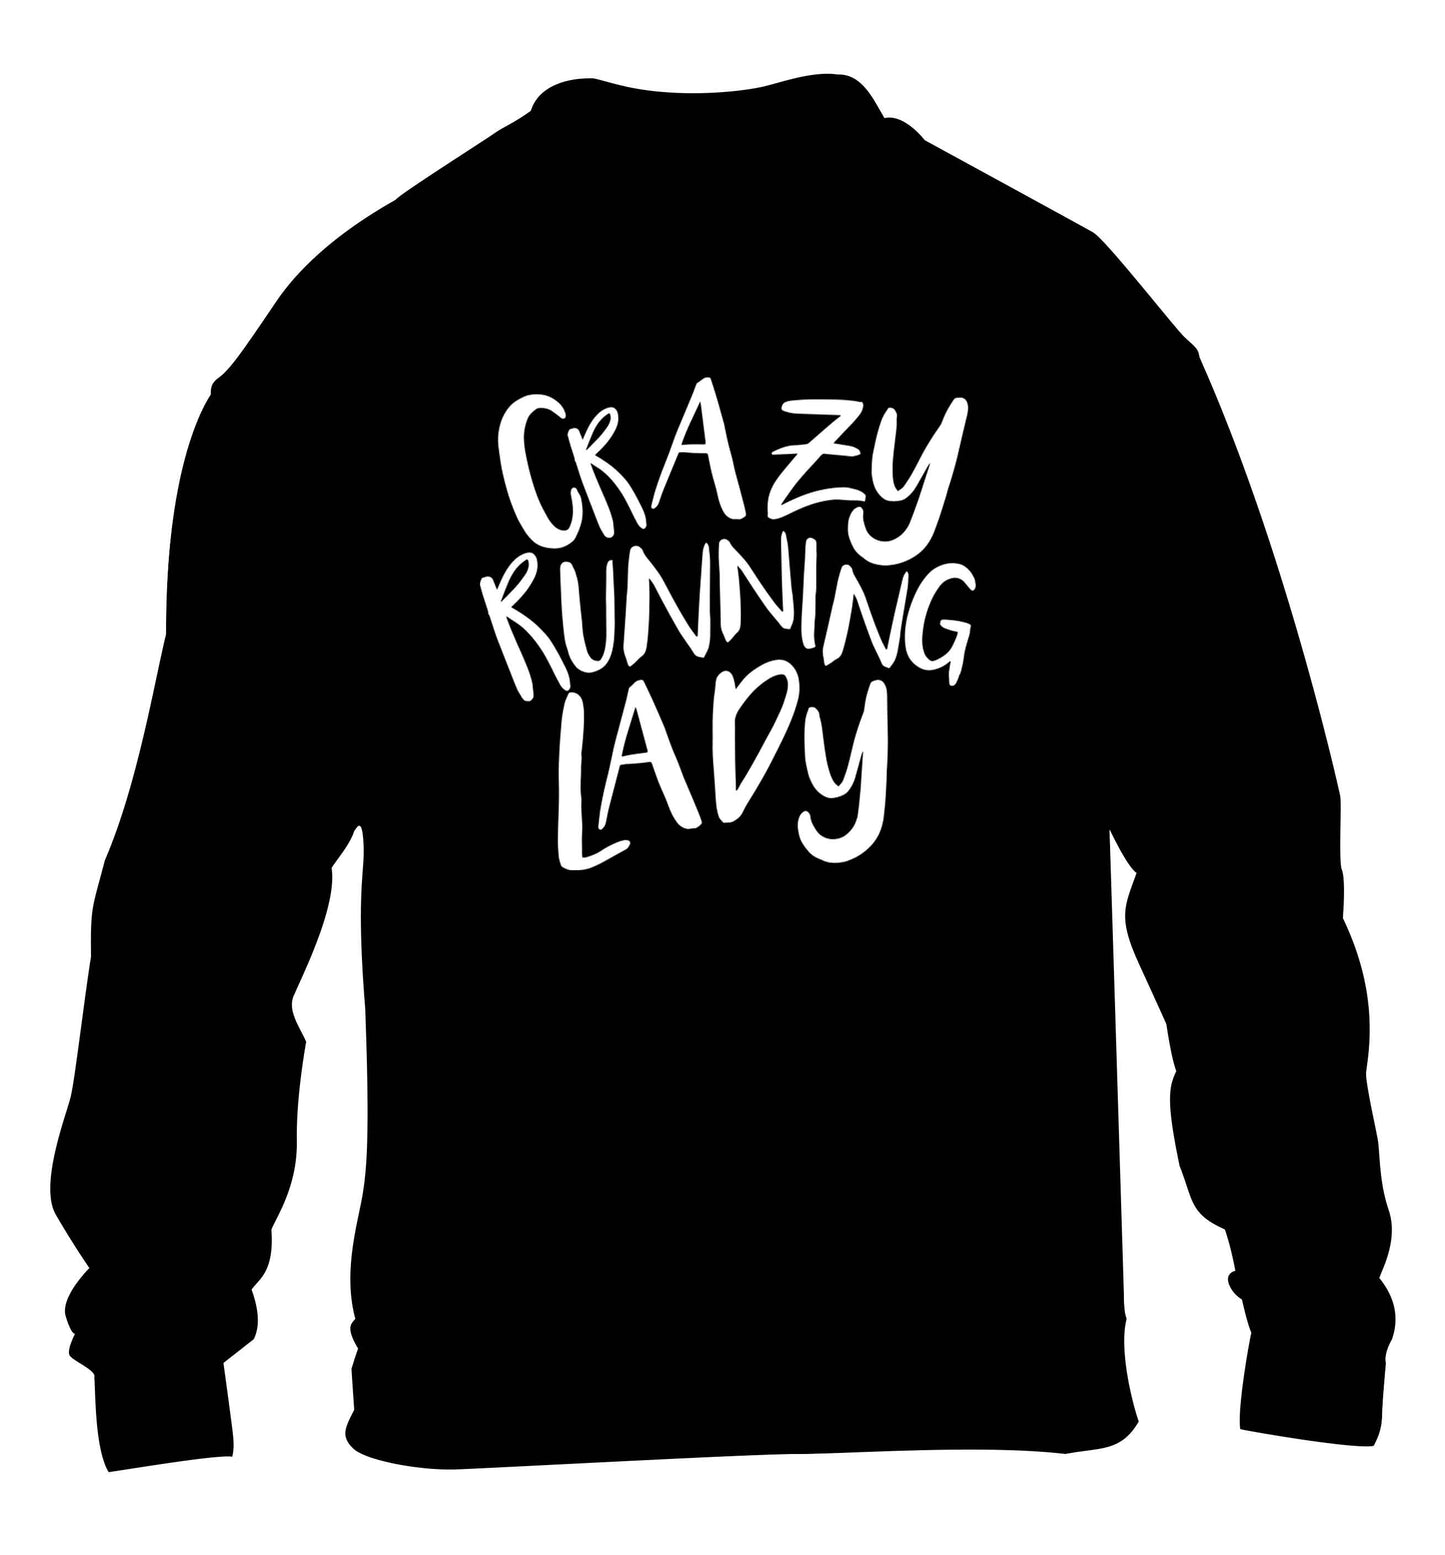 Crazy running lady children's black sweater 12-13 Years